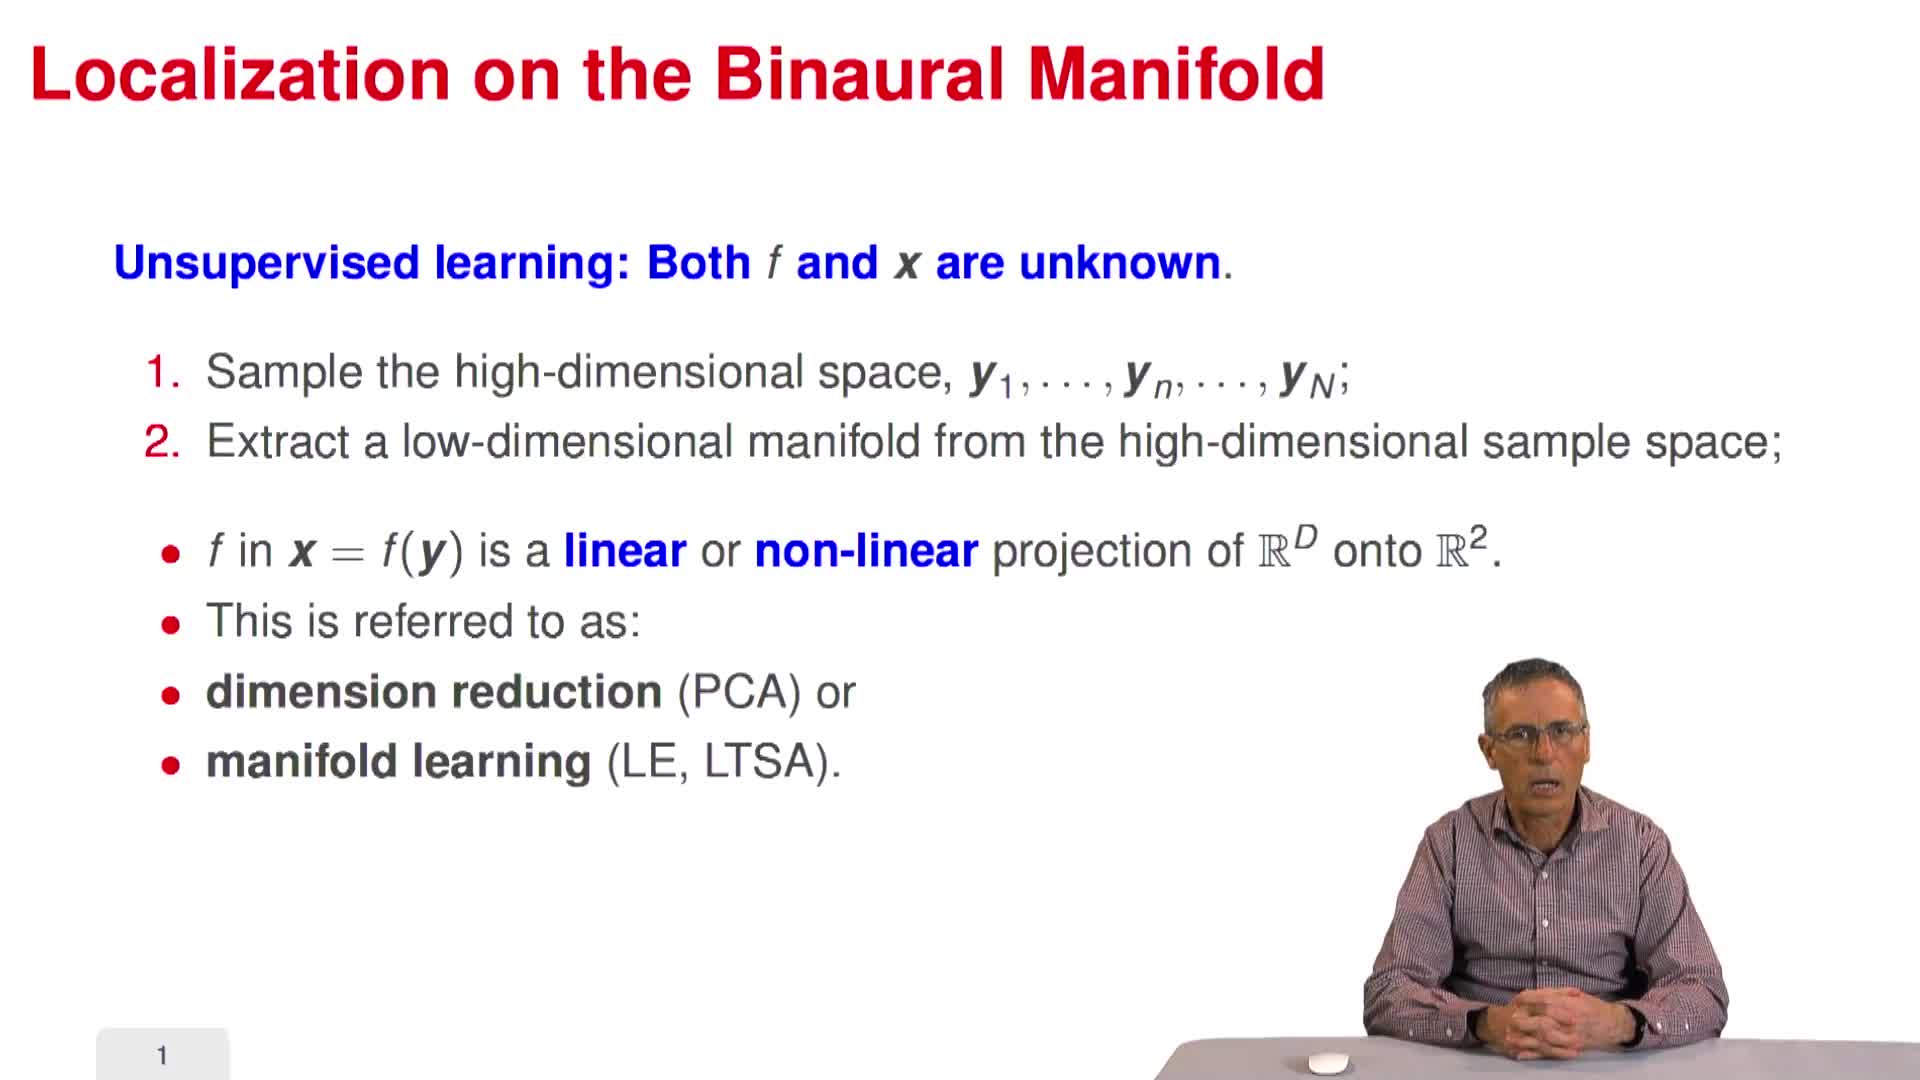 The Binaural Manifold